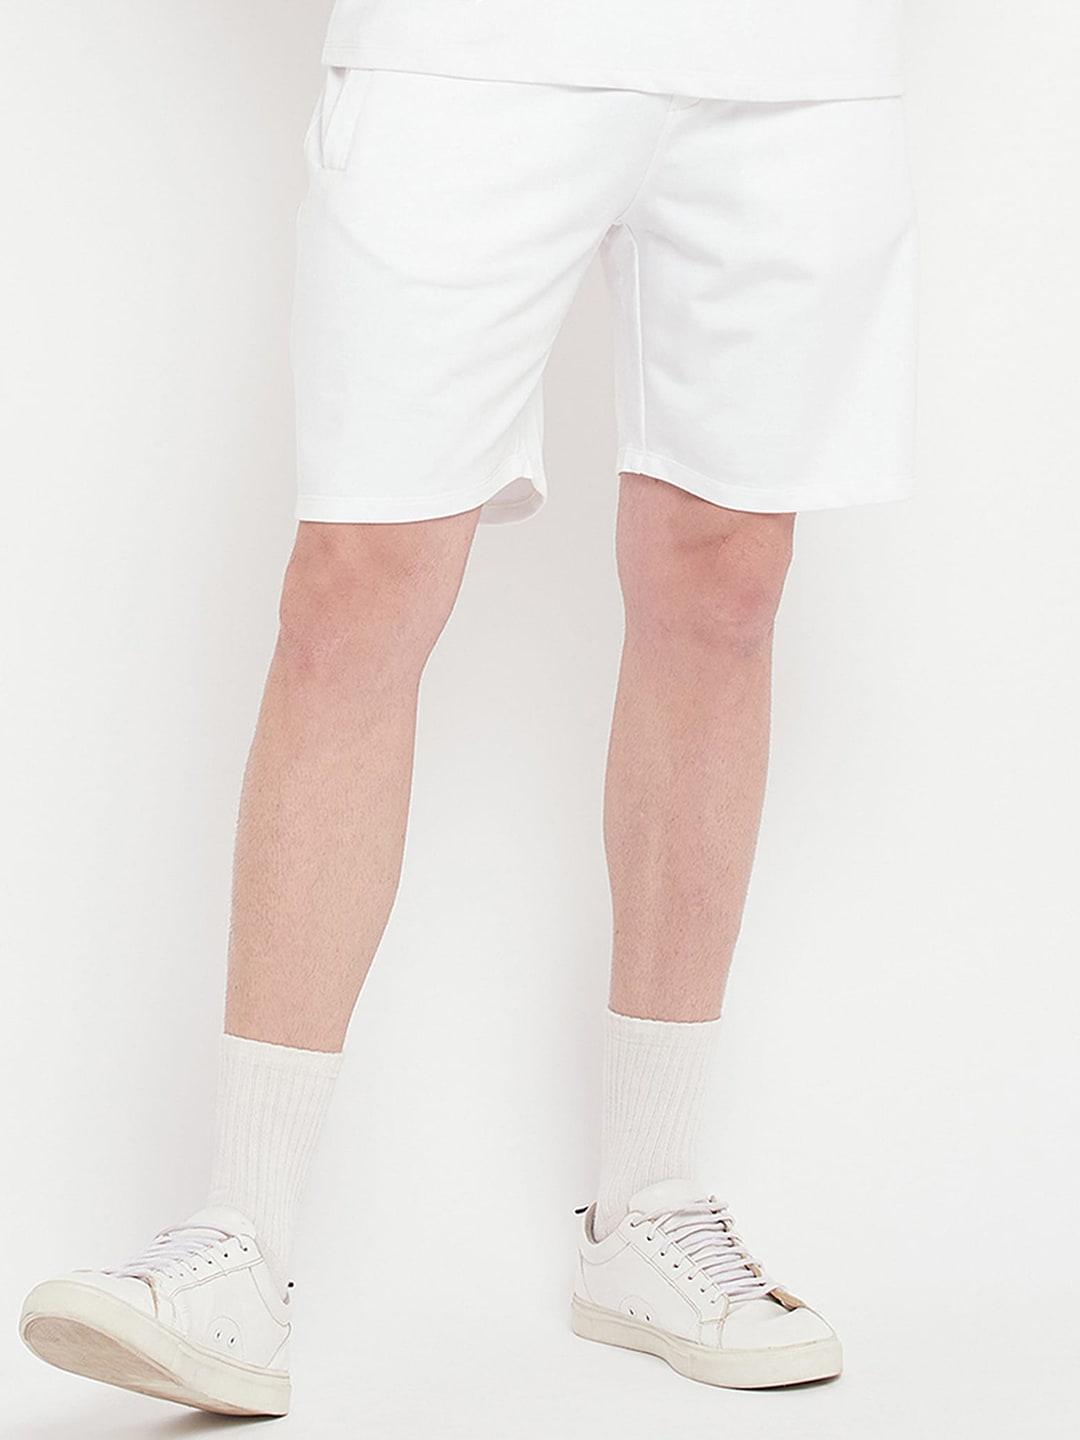 edrio-mid-rise-cotton-shorts